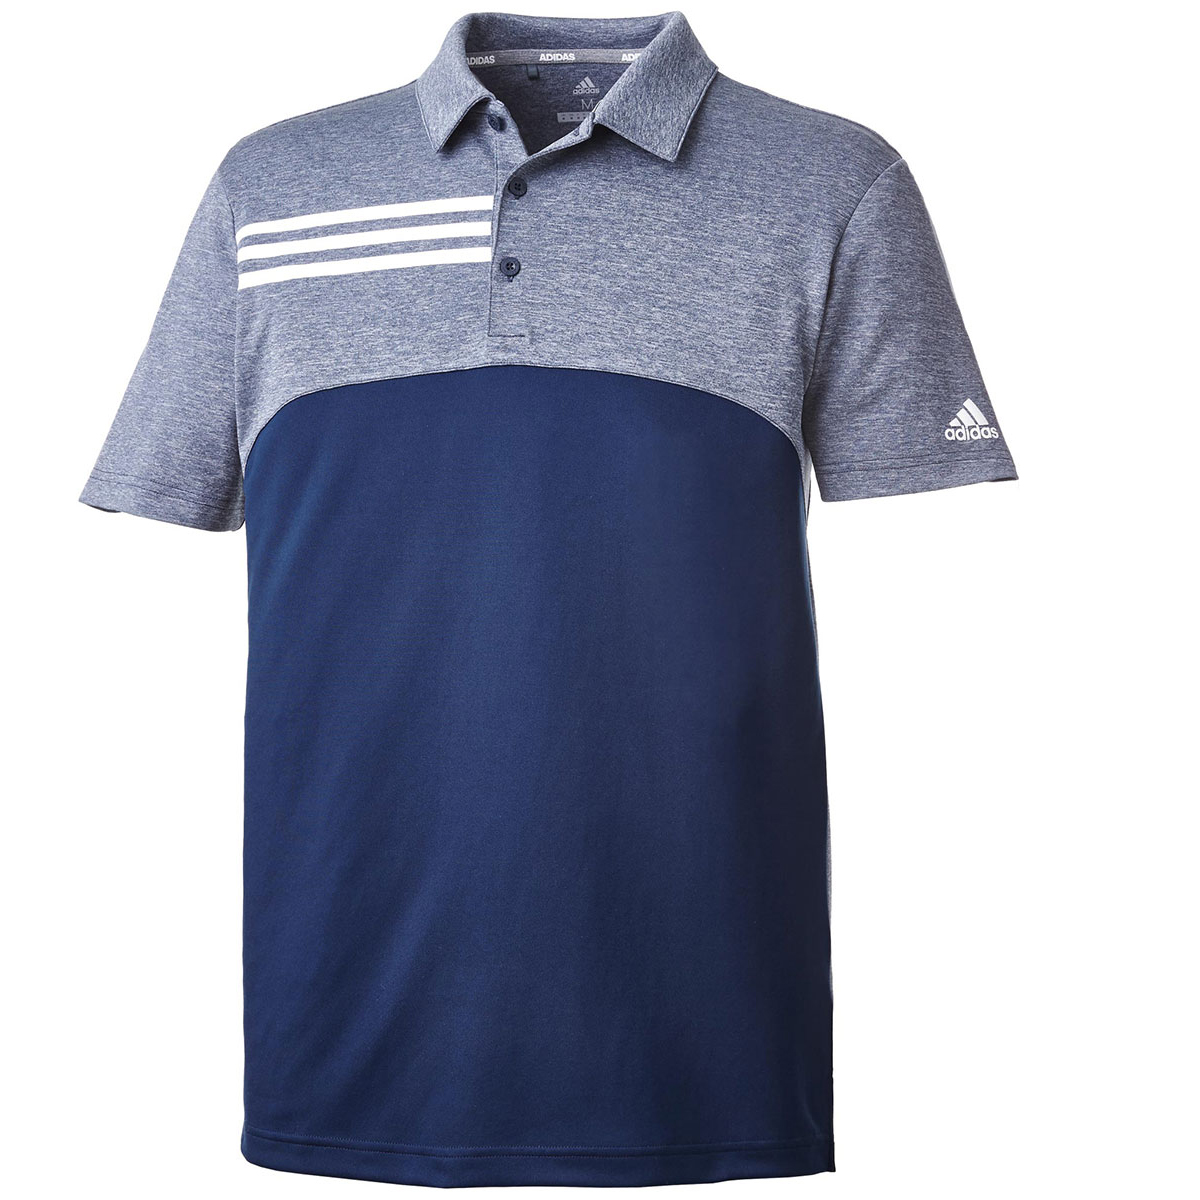 adidas Golf 3-Stripe Heather Block Polo Shirt from american golf